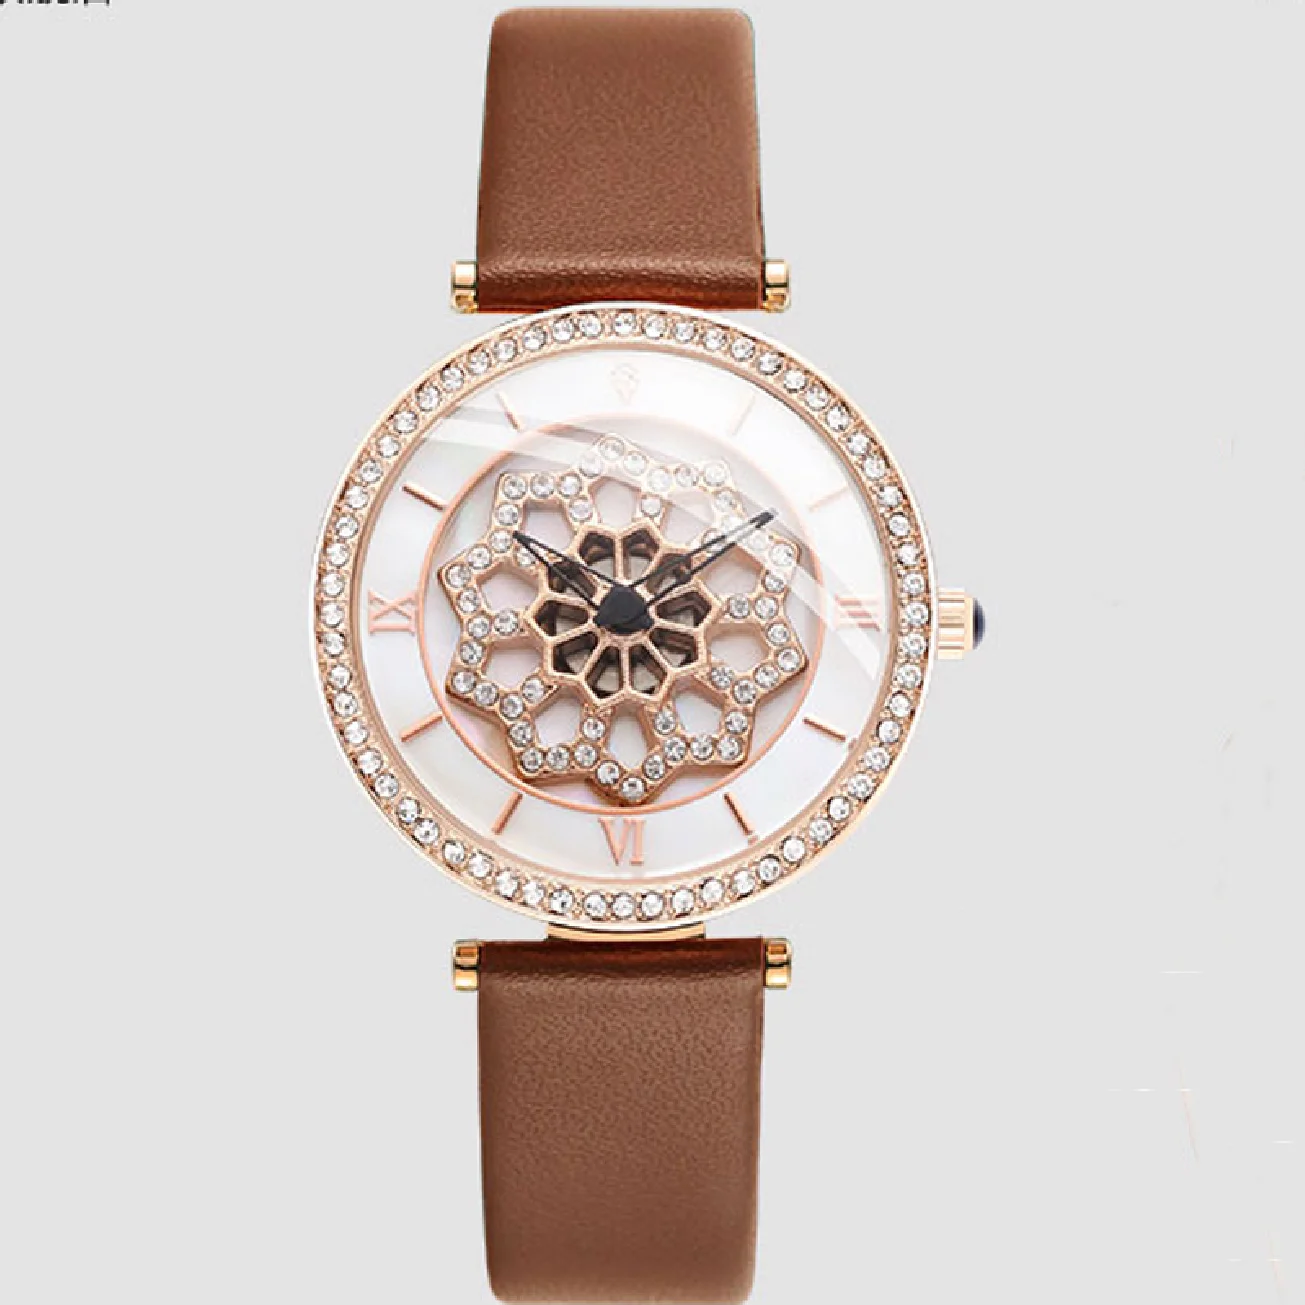 2019 Fashion Guou Top Flower Diamond Women Watch Dial Turn Ladies Quartz Wrist Watches Female Rotary Timepiece Zegarek Damski enlarge